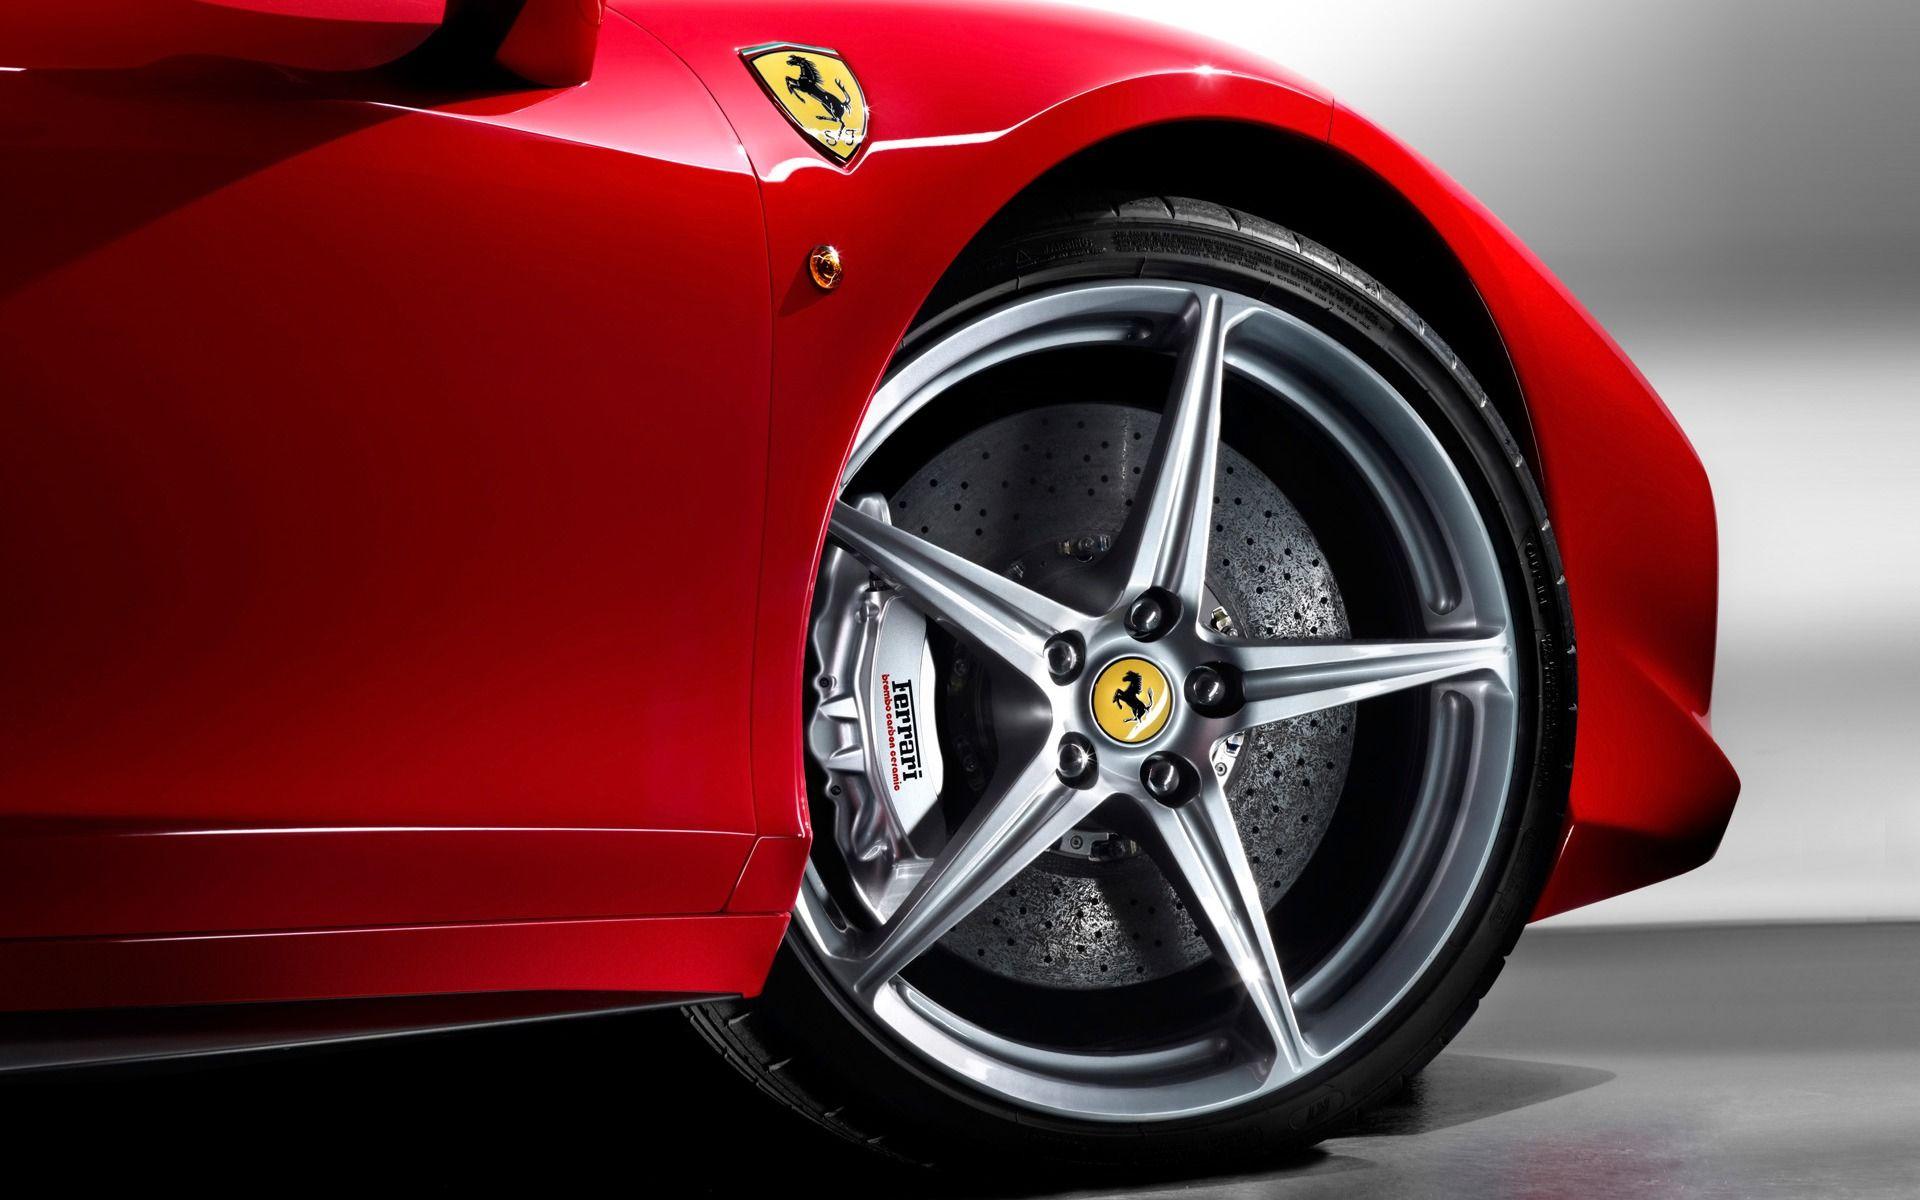 Ferrari rims Wallpaper Ferrari Cars Wallpaper in jpg format